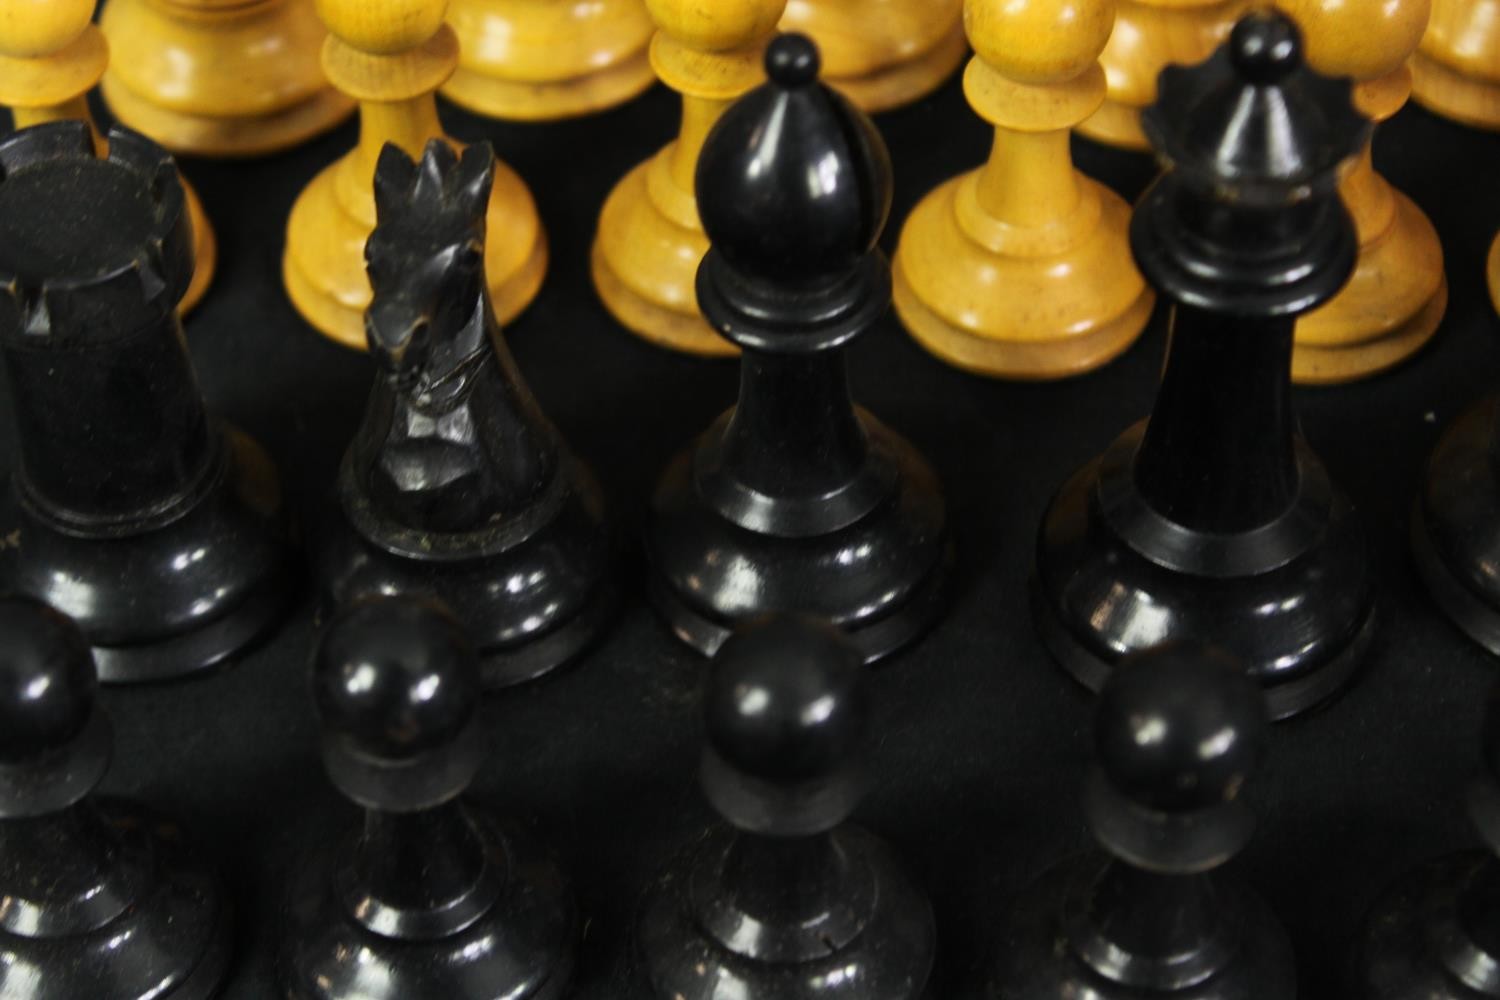 A C.1900 Staunton chess set, boxwood and ebony, boxed. H.10 W.21 D.16cm. (box). - Image 5 of 7